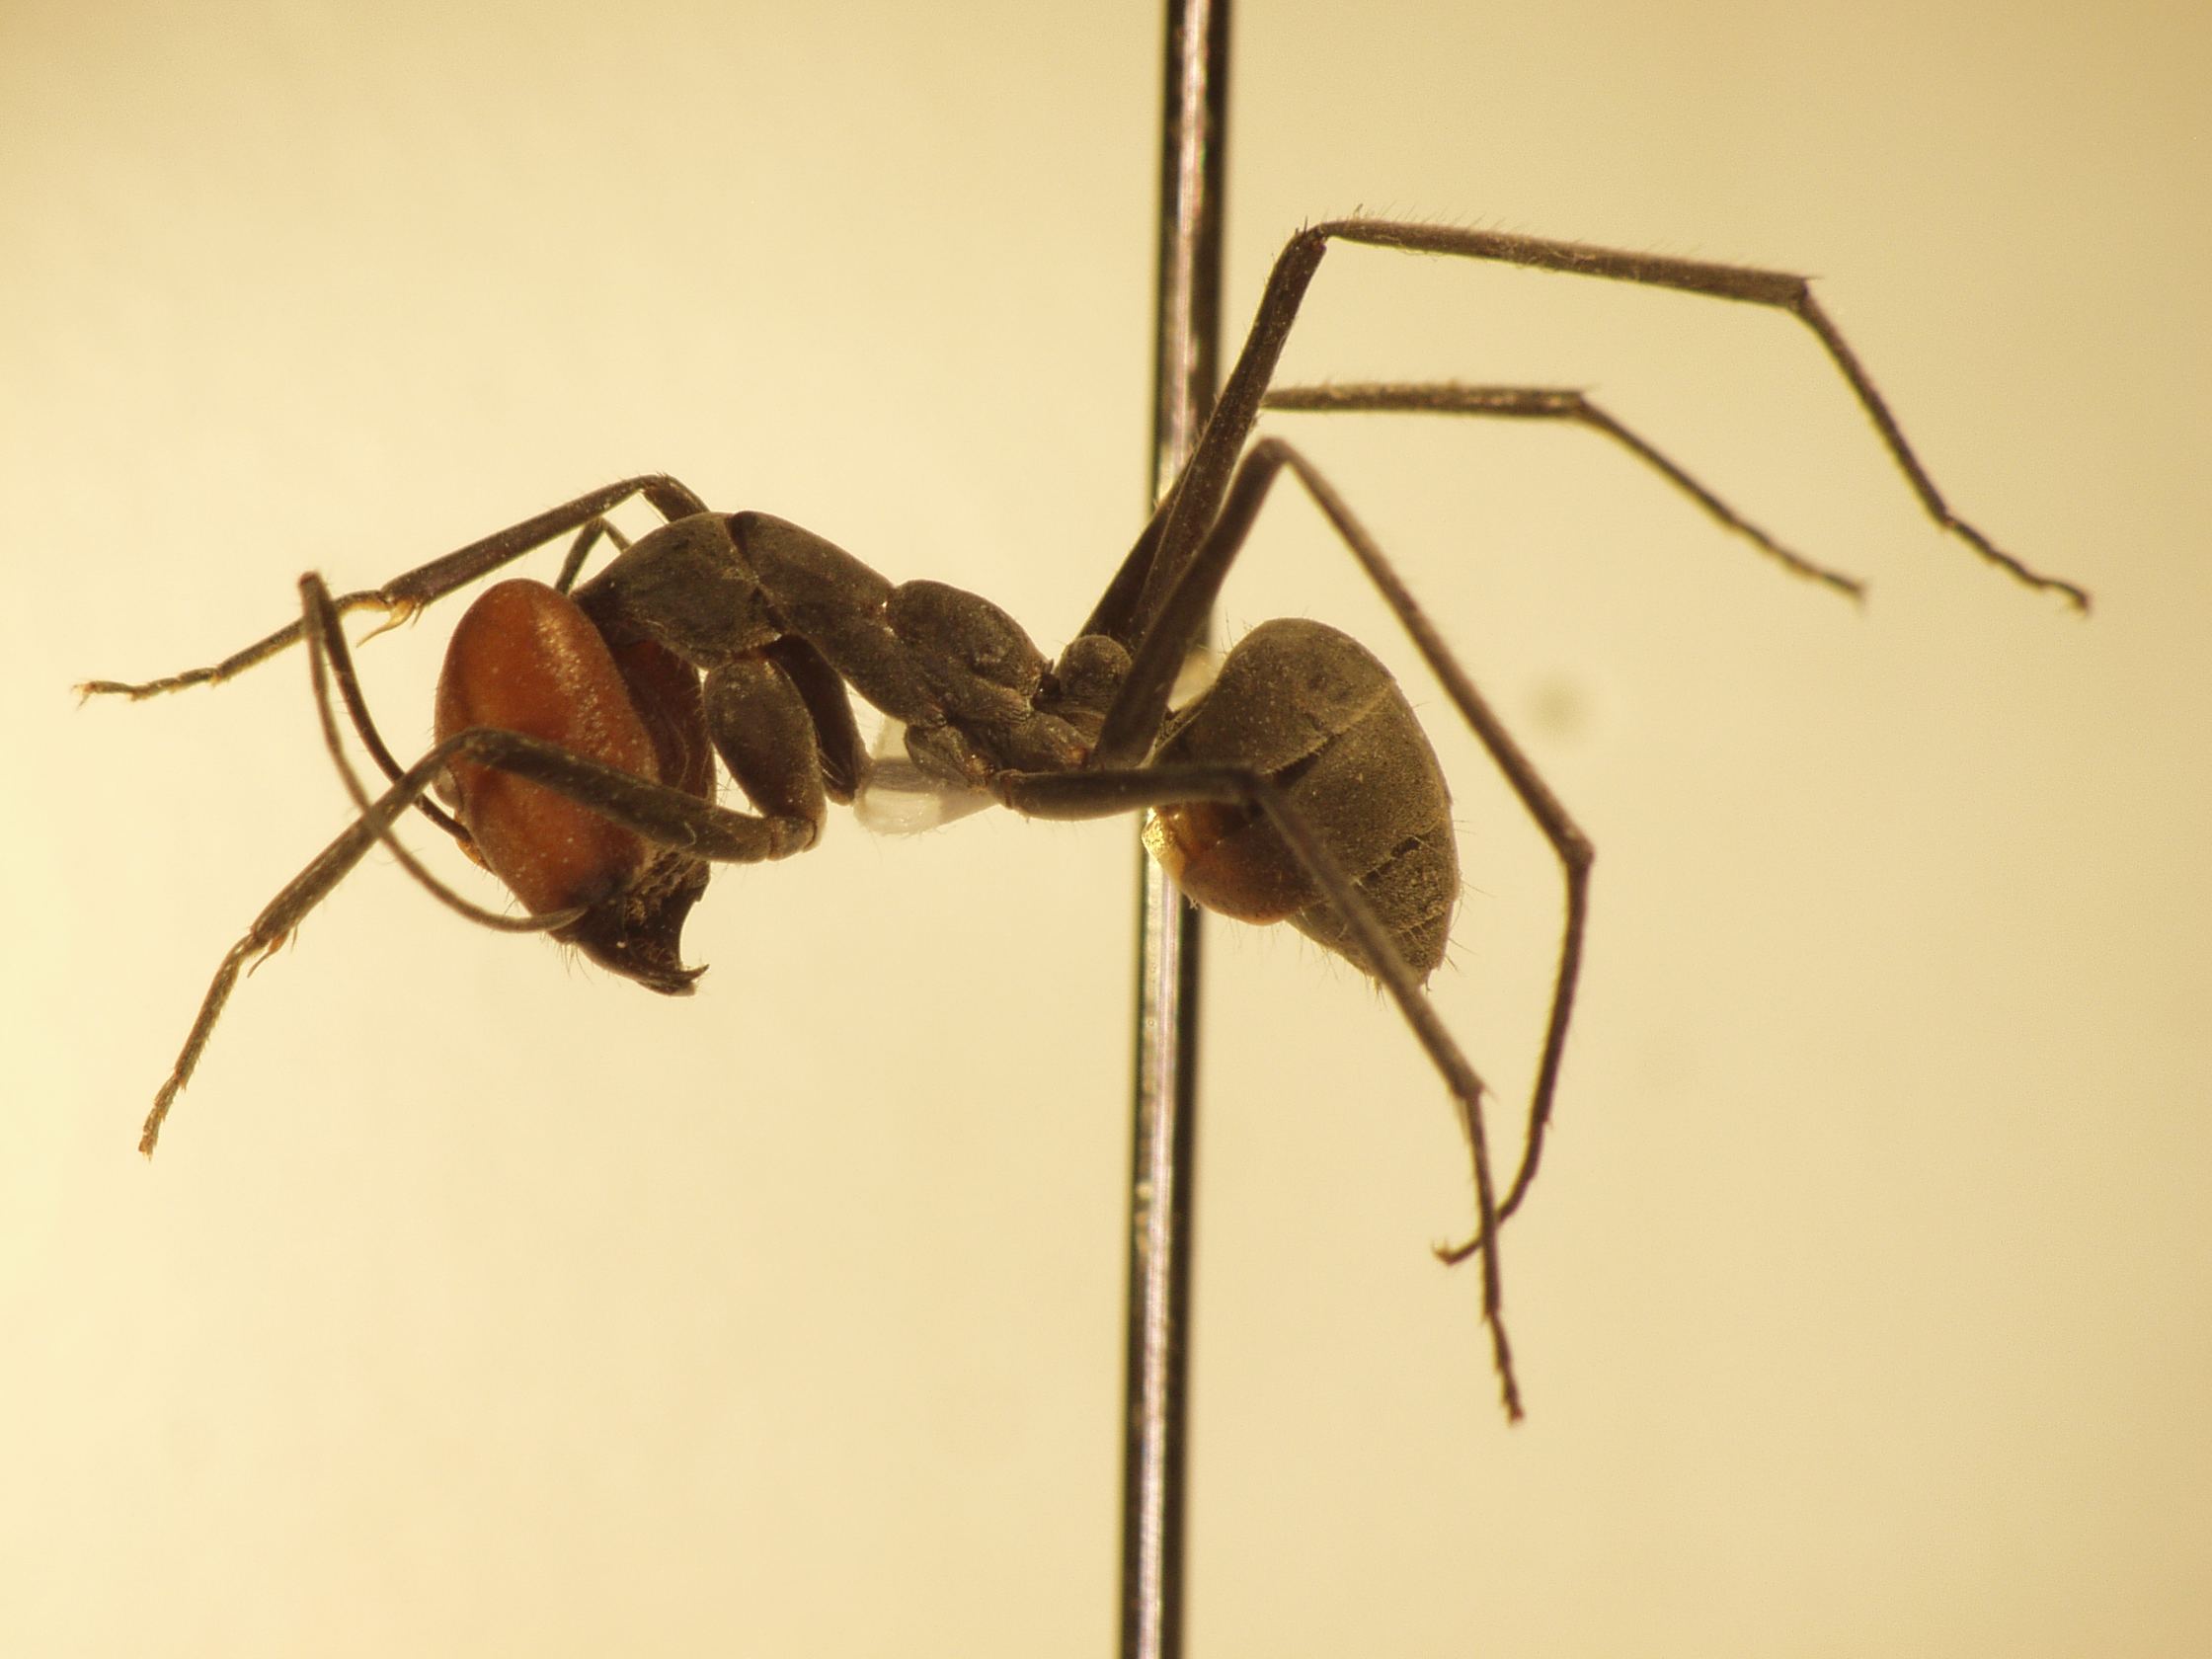 Camponotus 28 lateral